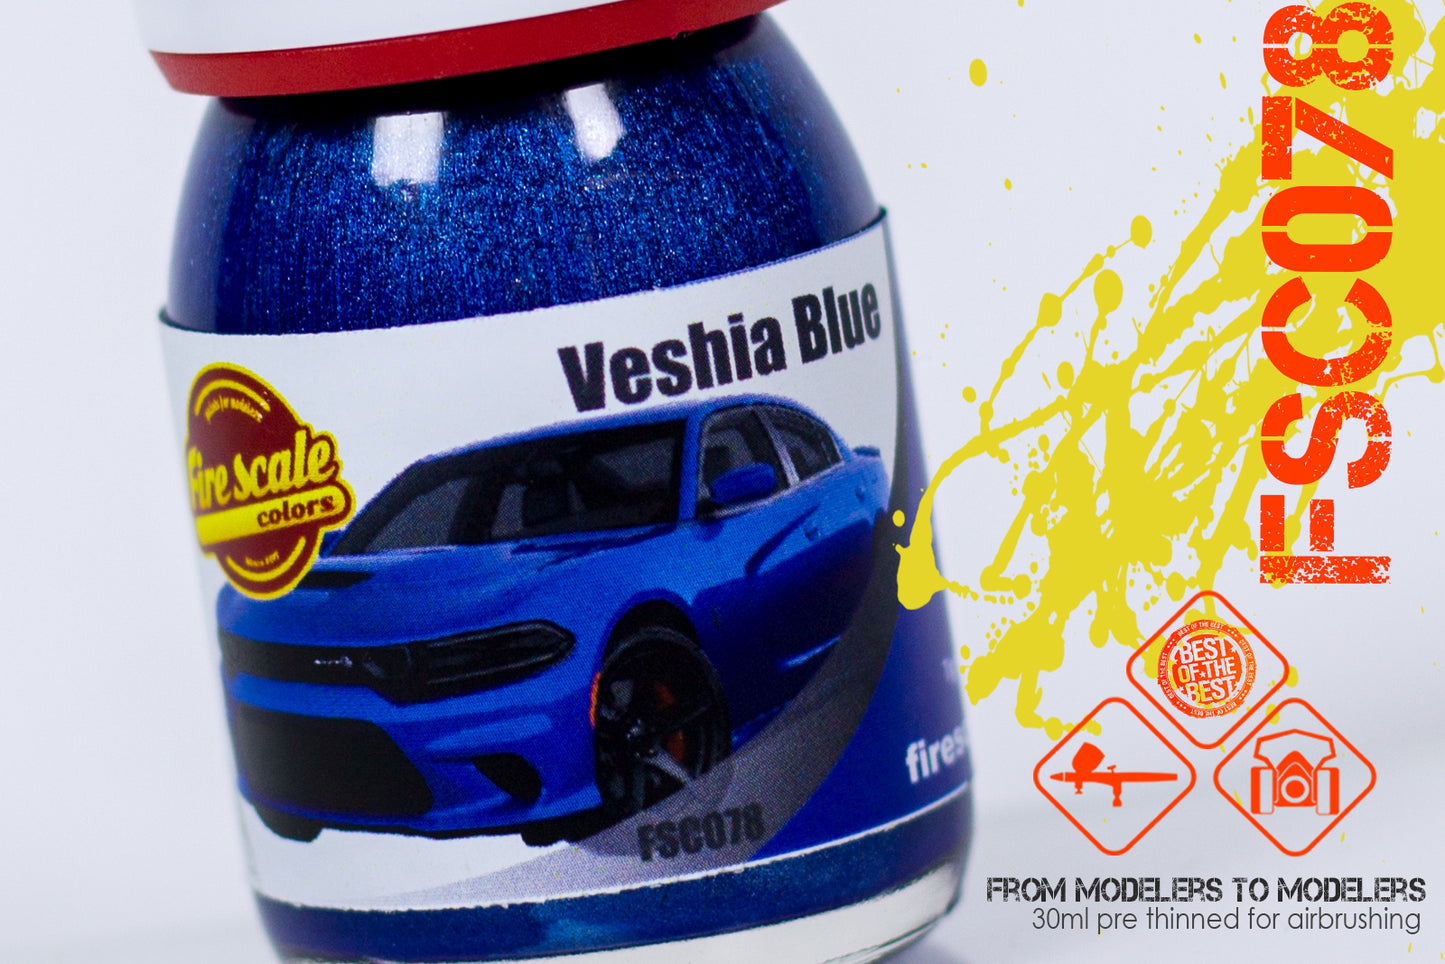 Veshia Blue